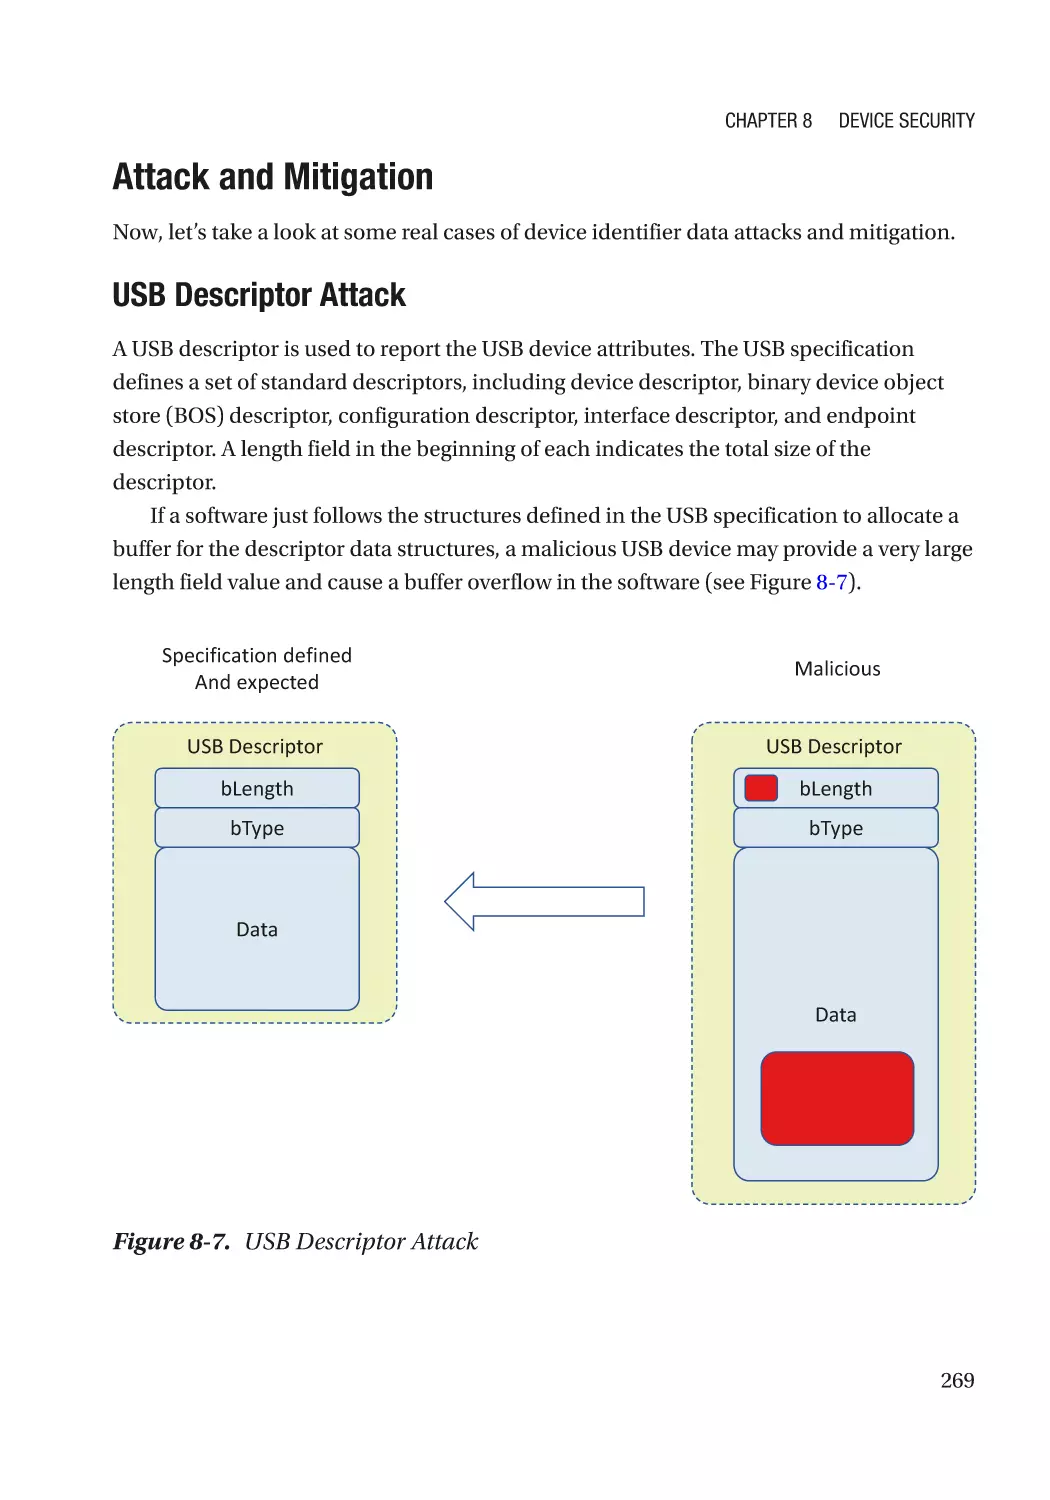 Attack and Mitigation
USB Descriptor Attack